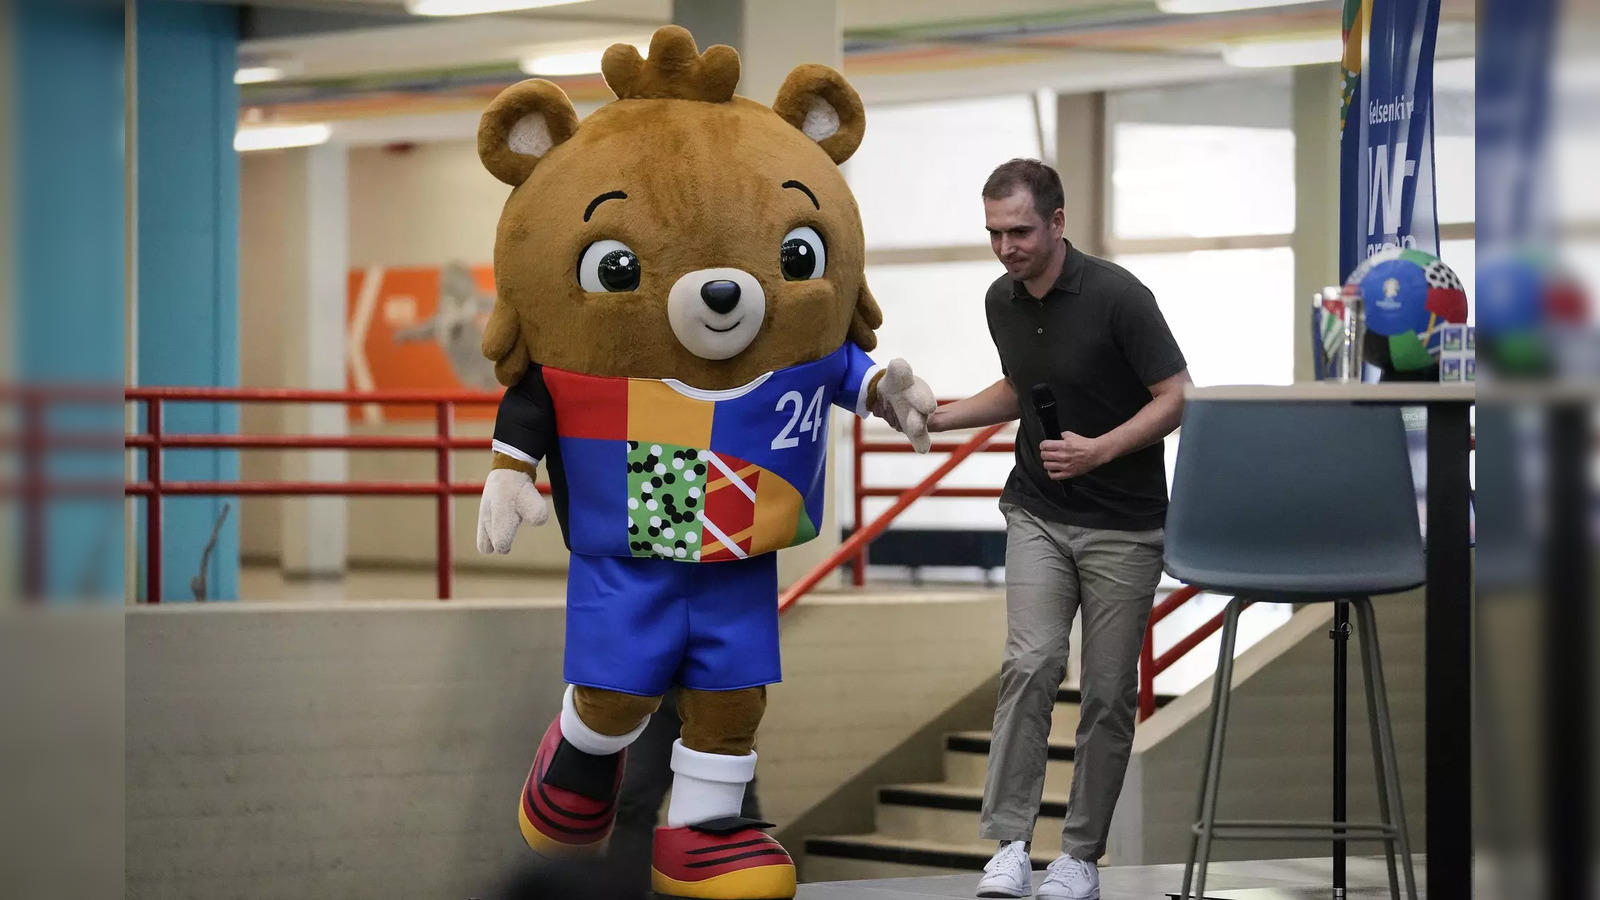 teddy bear: Germany unveils a teddy bear as the mascot for Euro